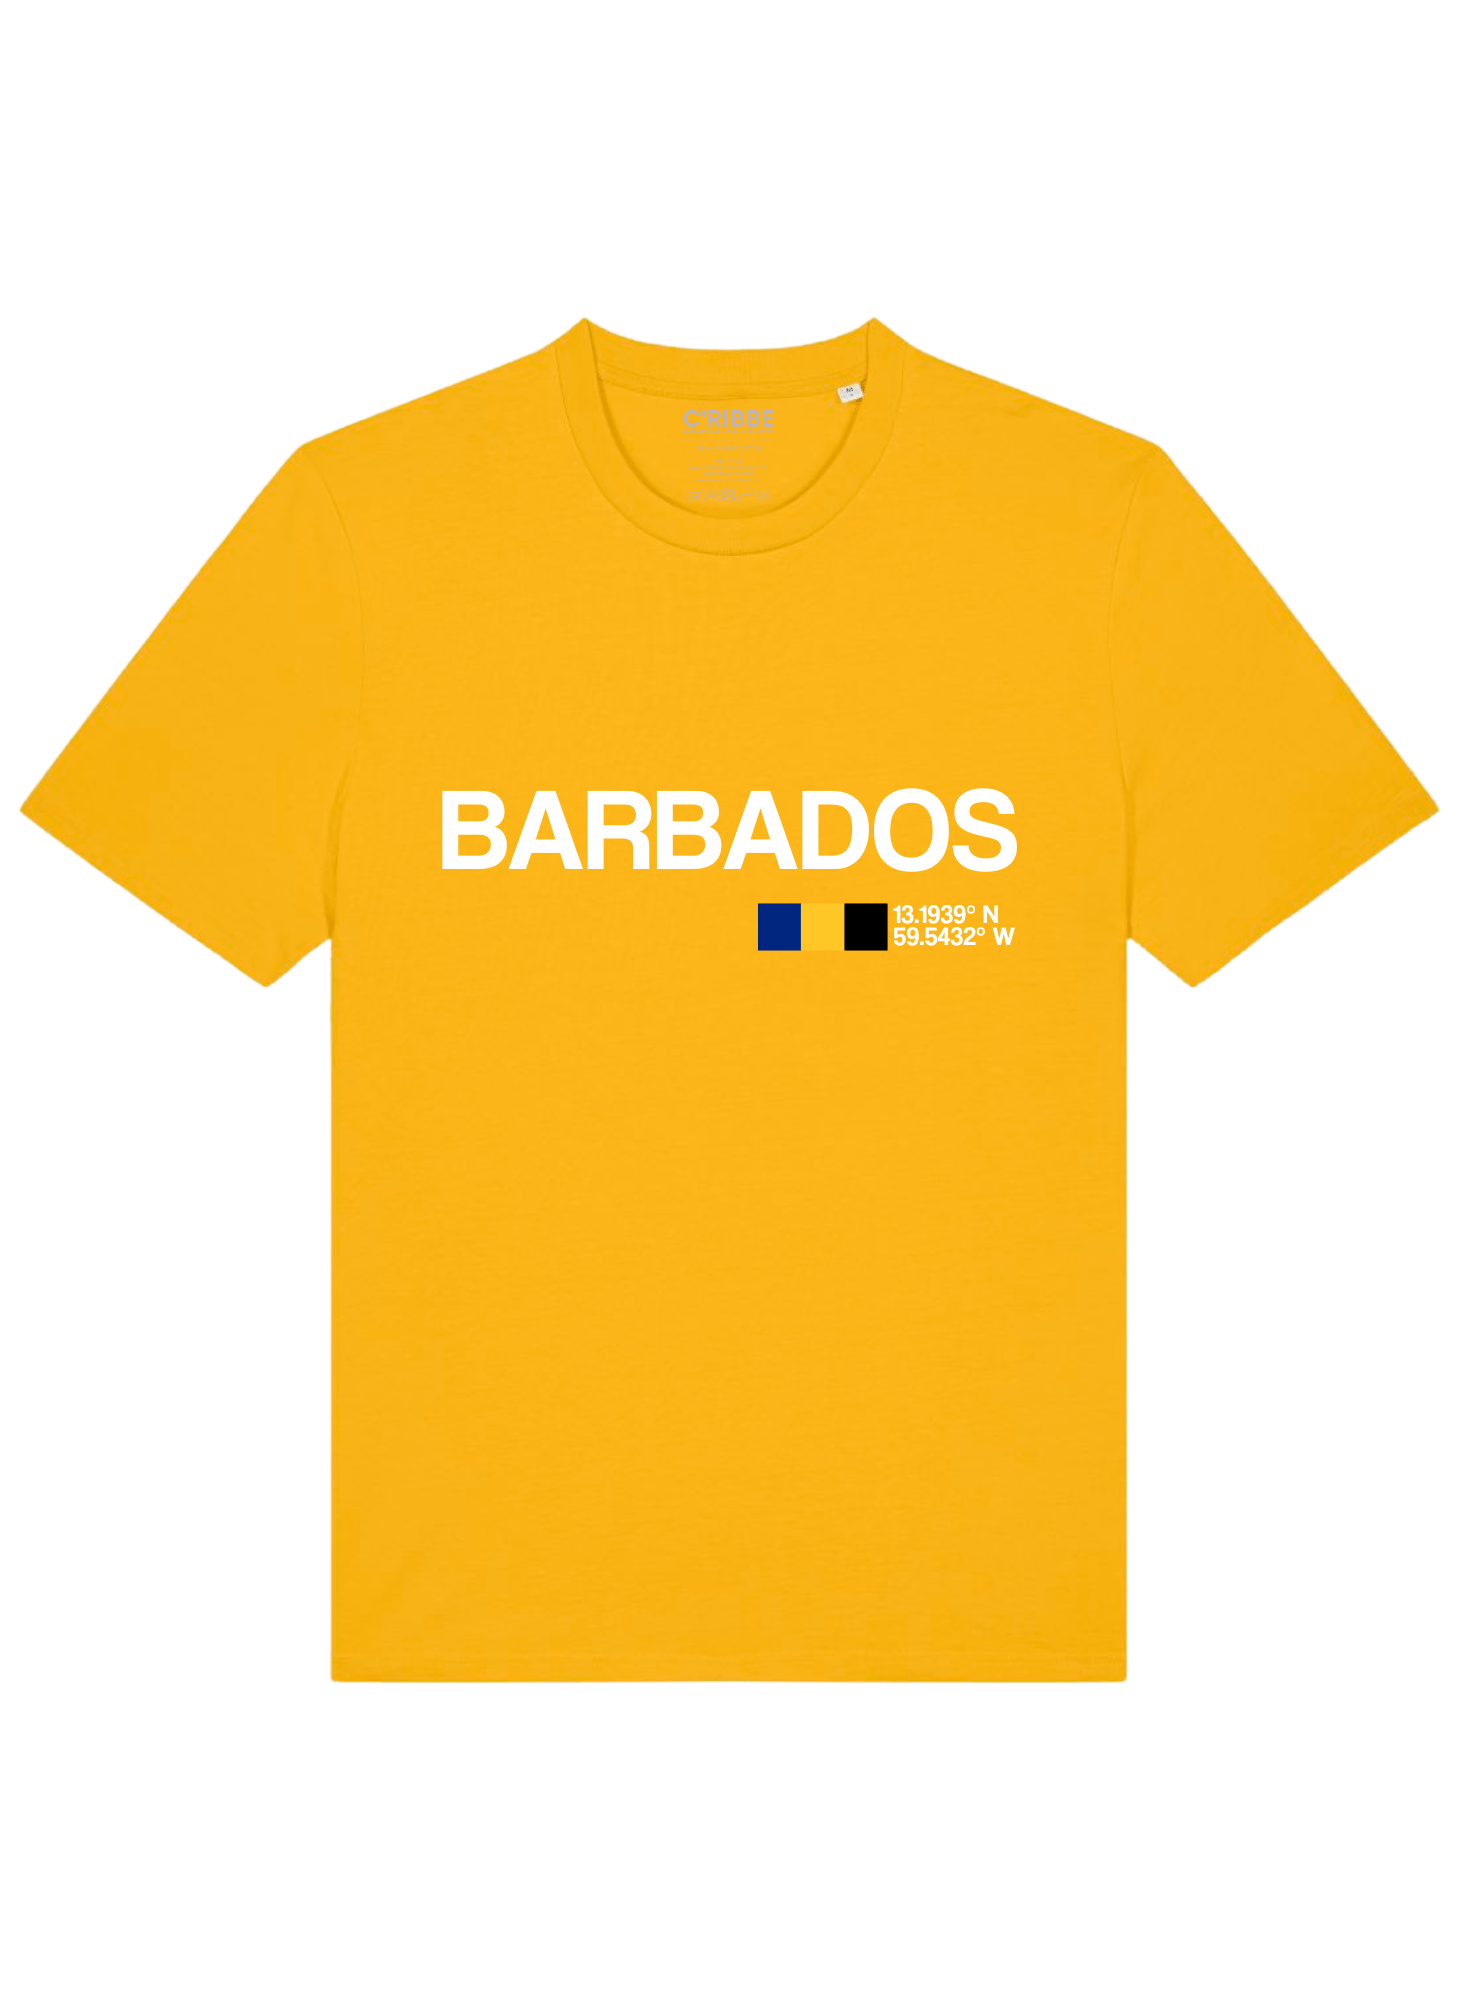 BARBADOS Print Unisex Crew Neck T-Shirt, Worker Blue